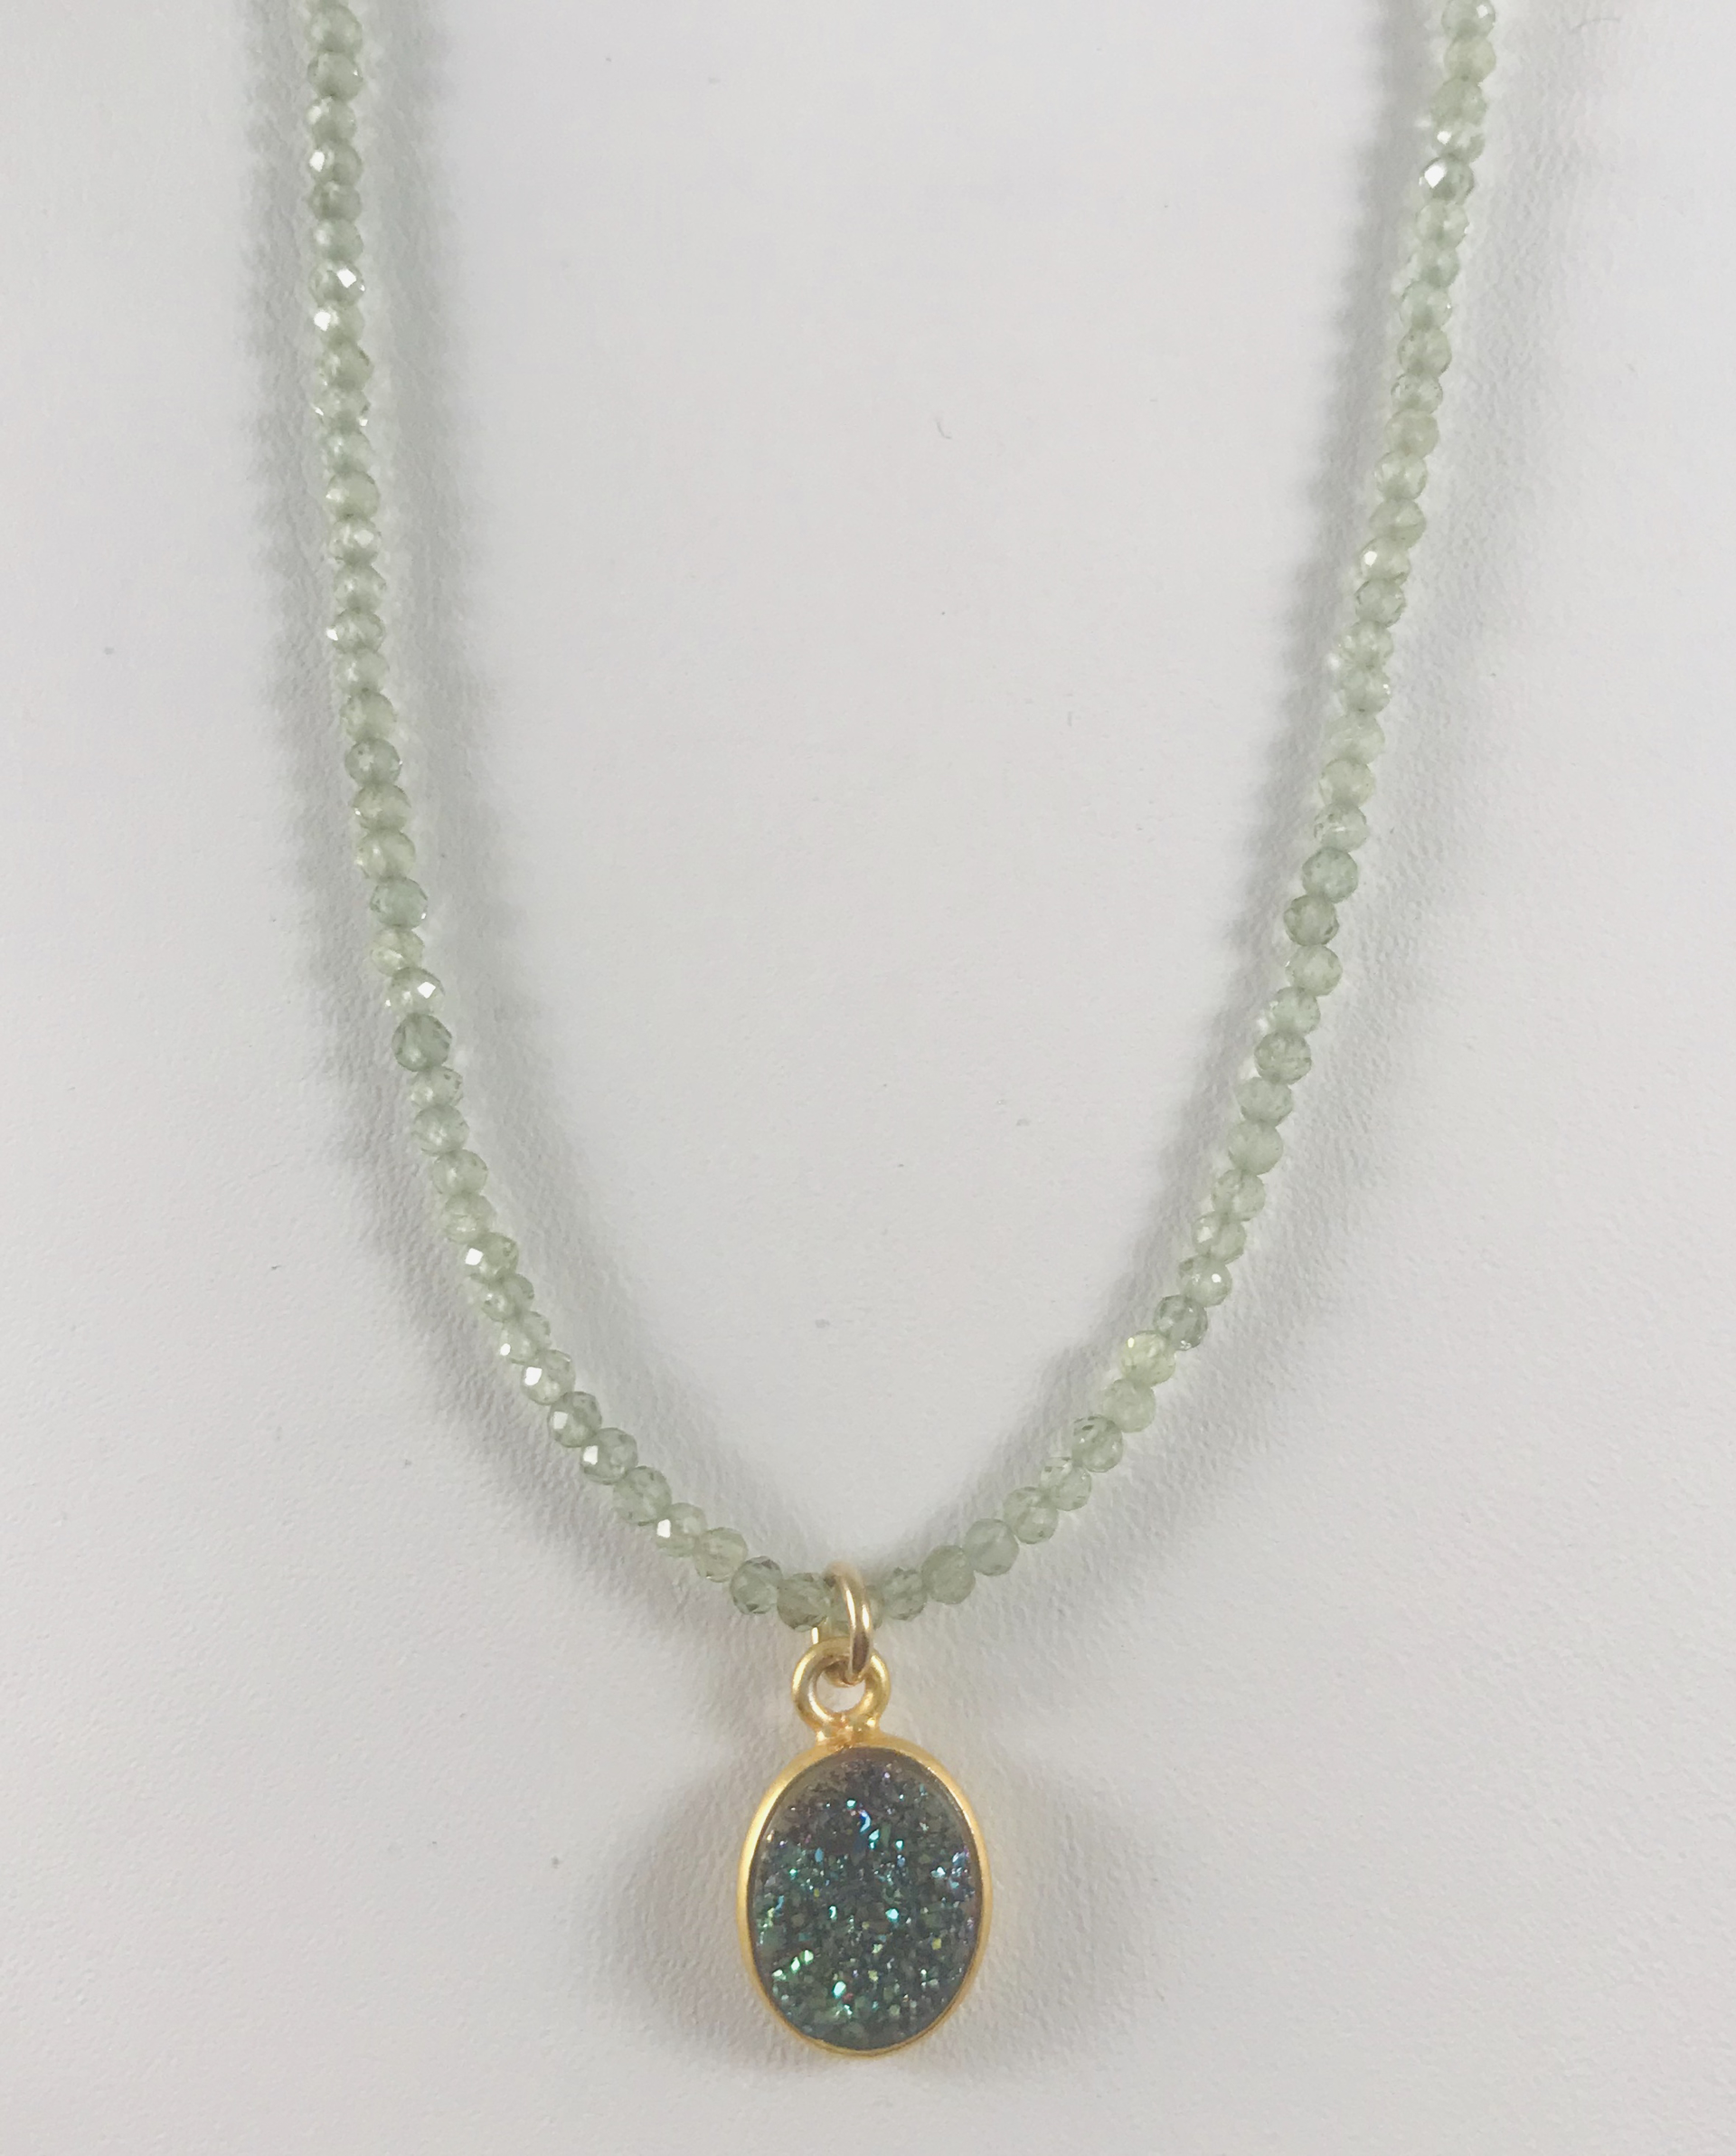  Tiny Prenite  Necklace, druzy quartz pendant, DN1 by Nance Trueworthy